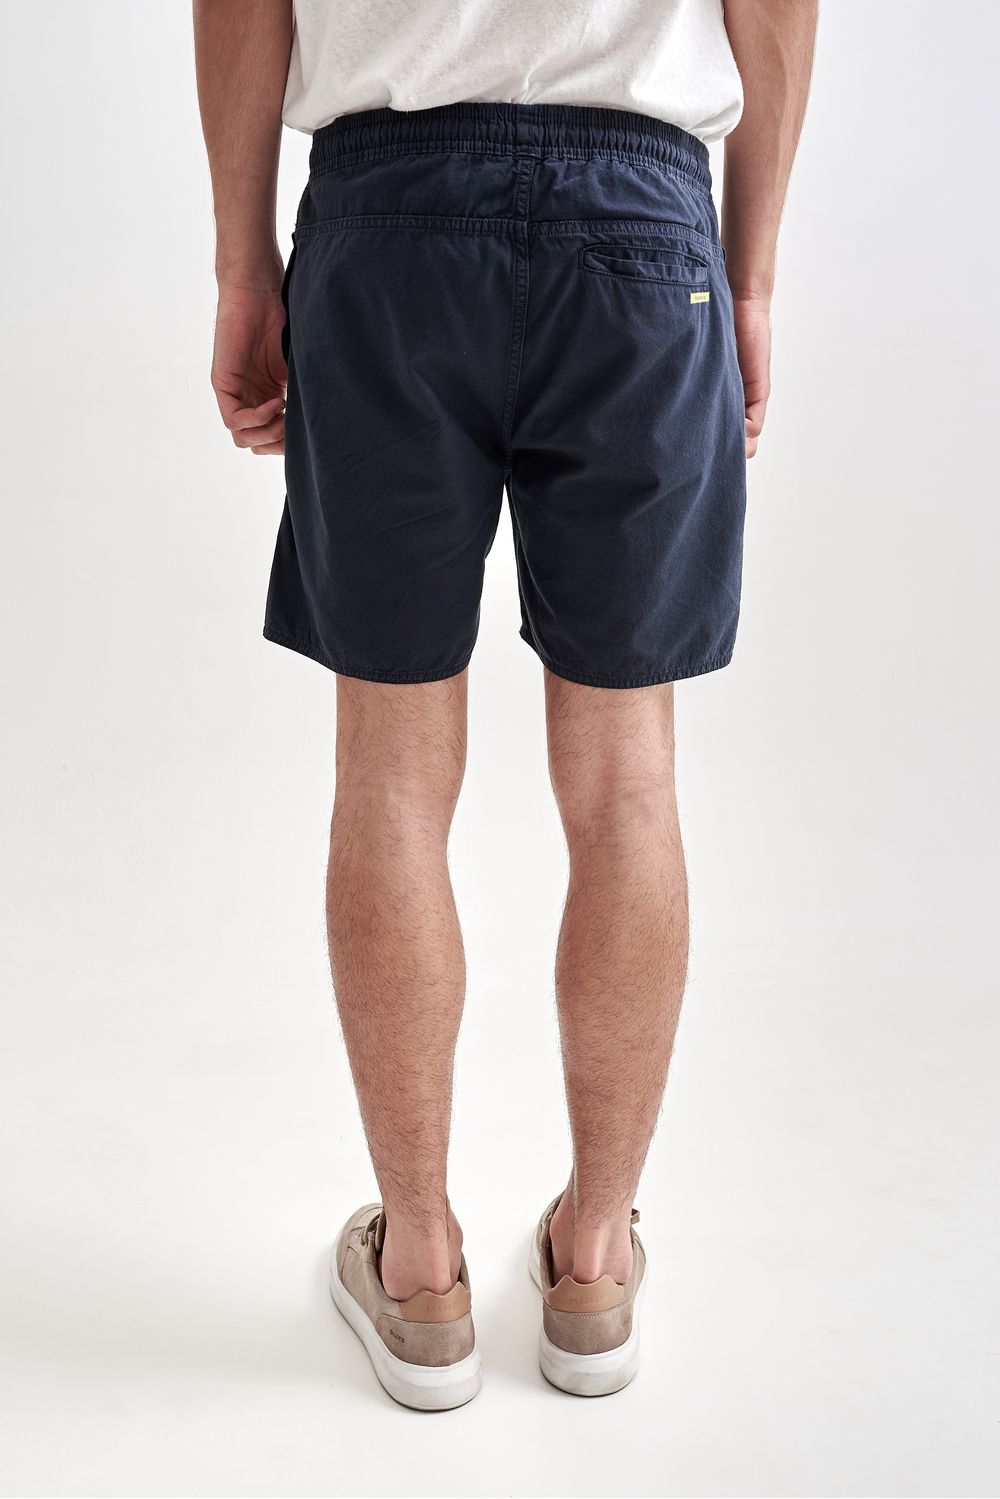 AUSTRAL - Shorts Vale Azul Escuro